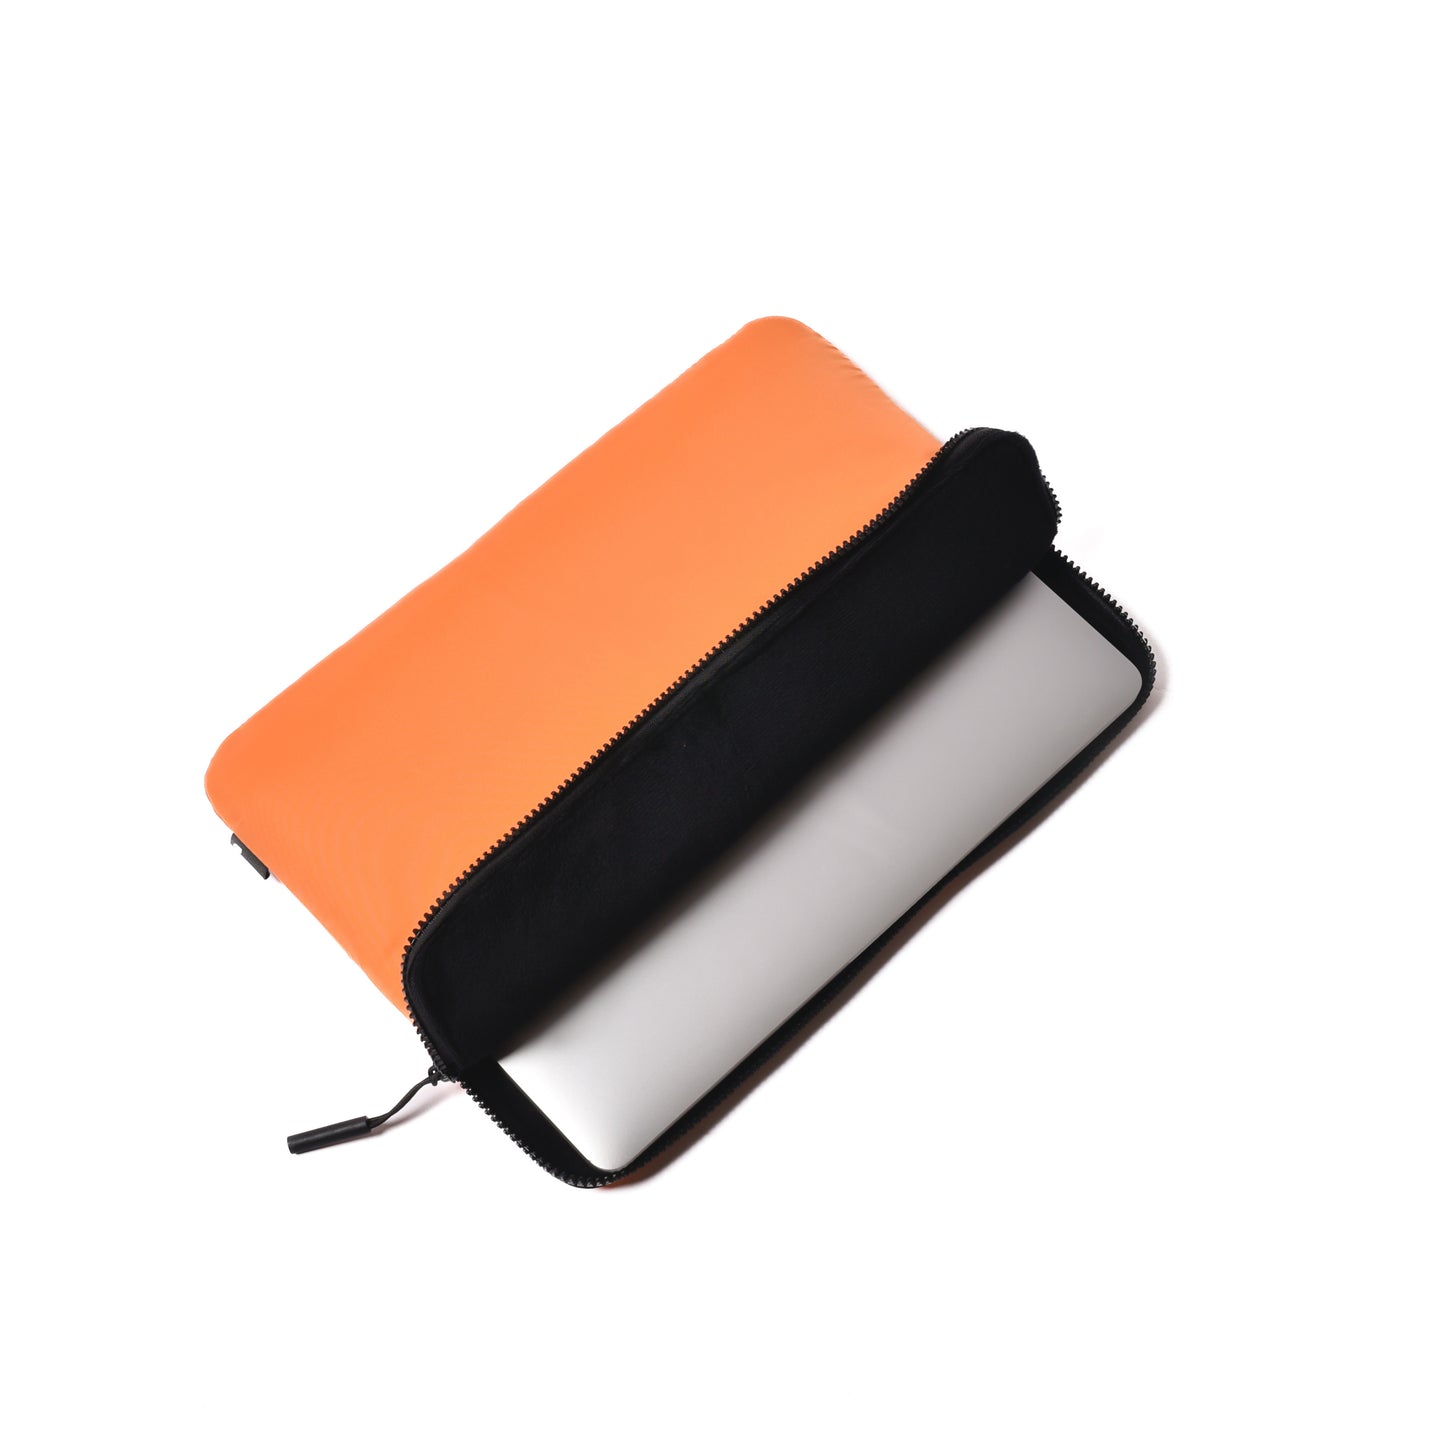 Compact Sleeve in Flight Nylon for  MacBook Pro 13"  -Orange-